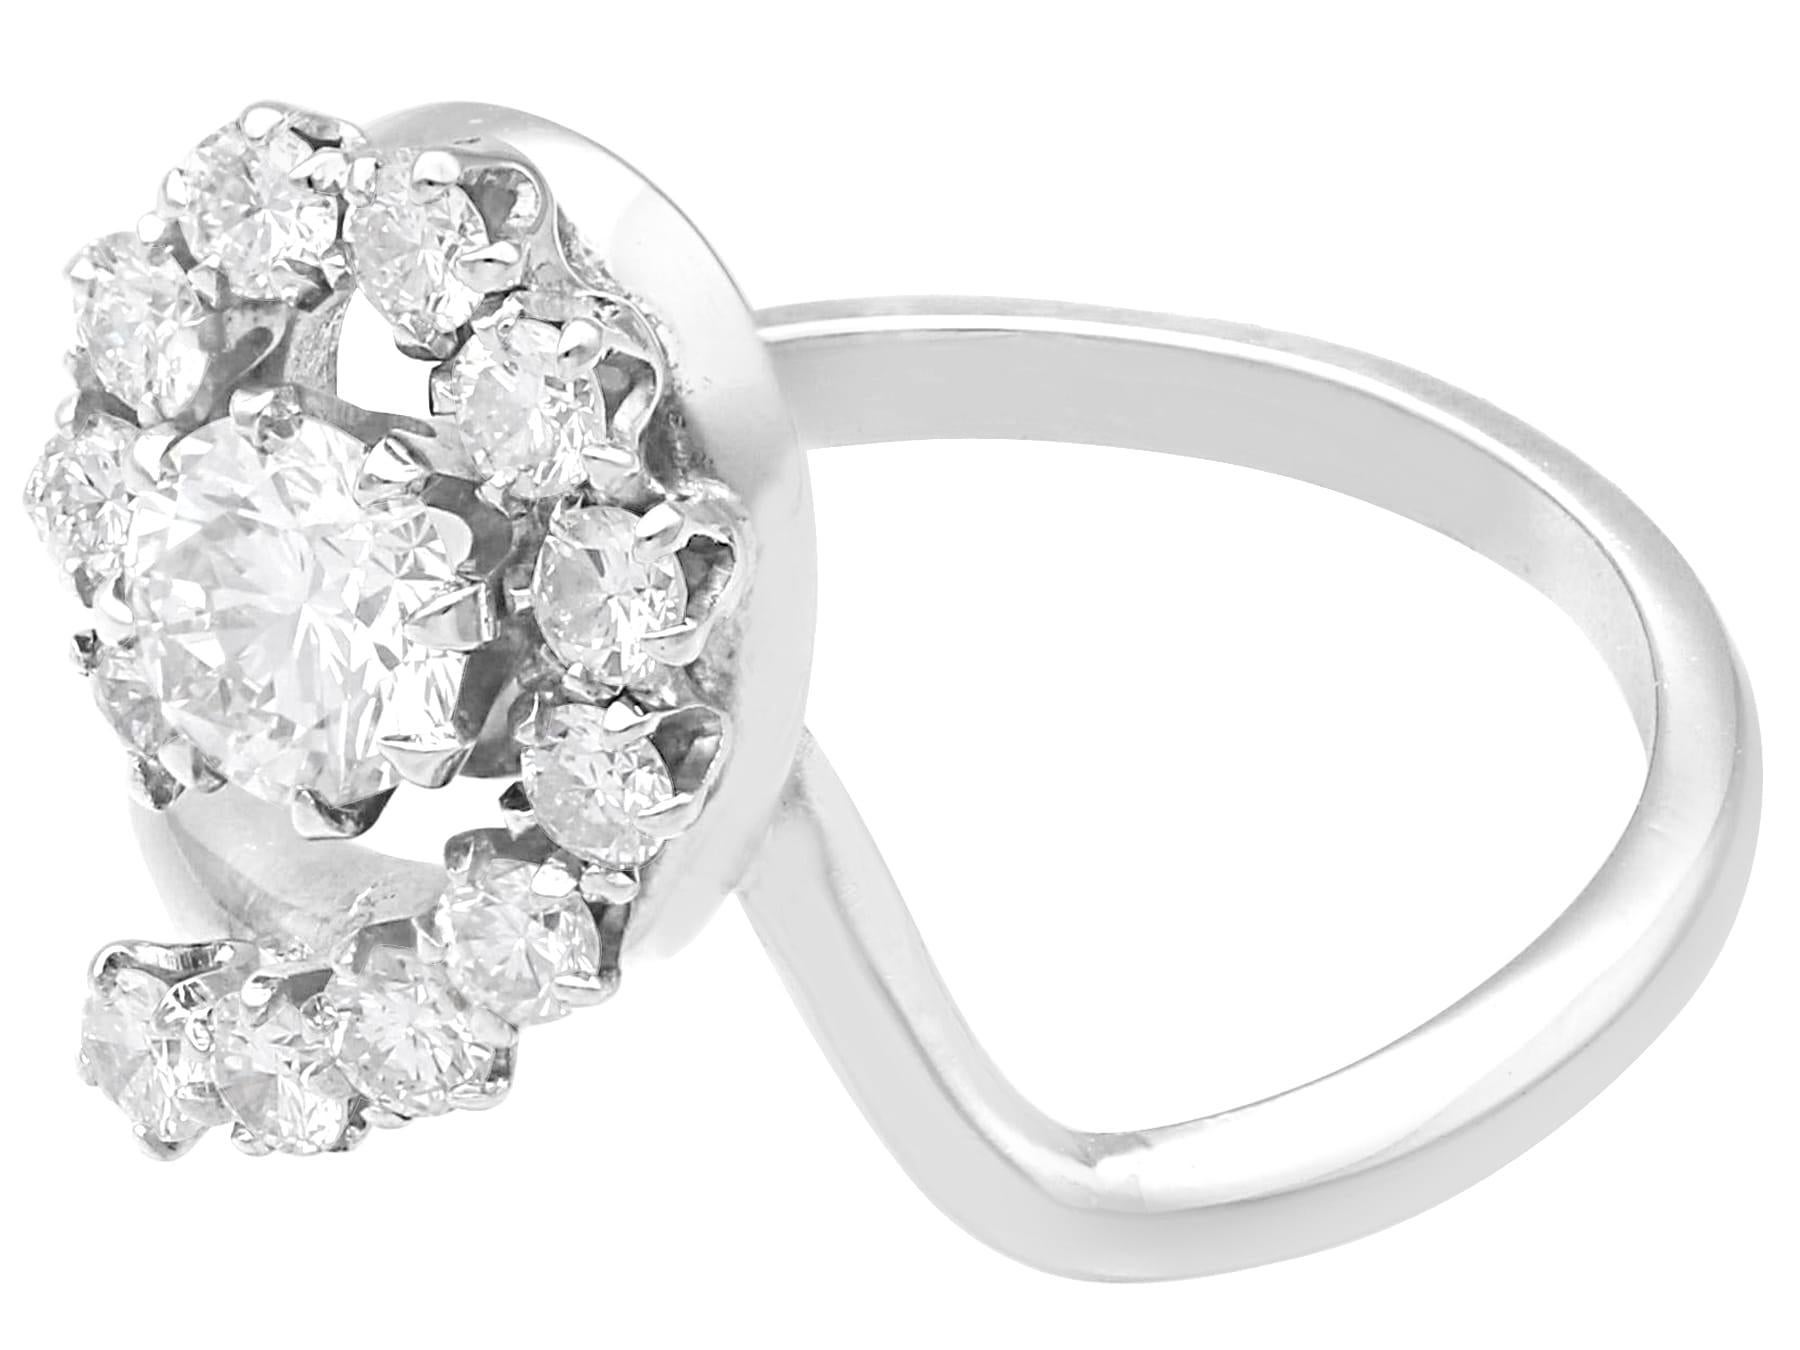 1940s diamond ring